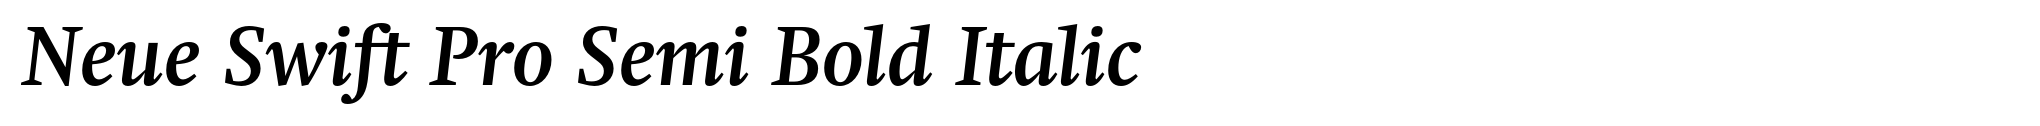 Neue Swift Pro Semi Bold Italic image